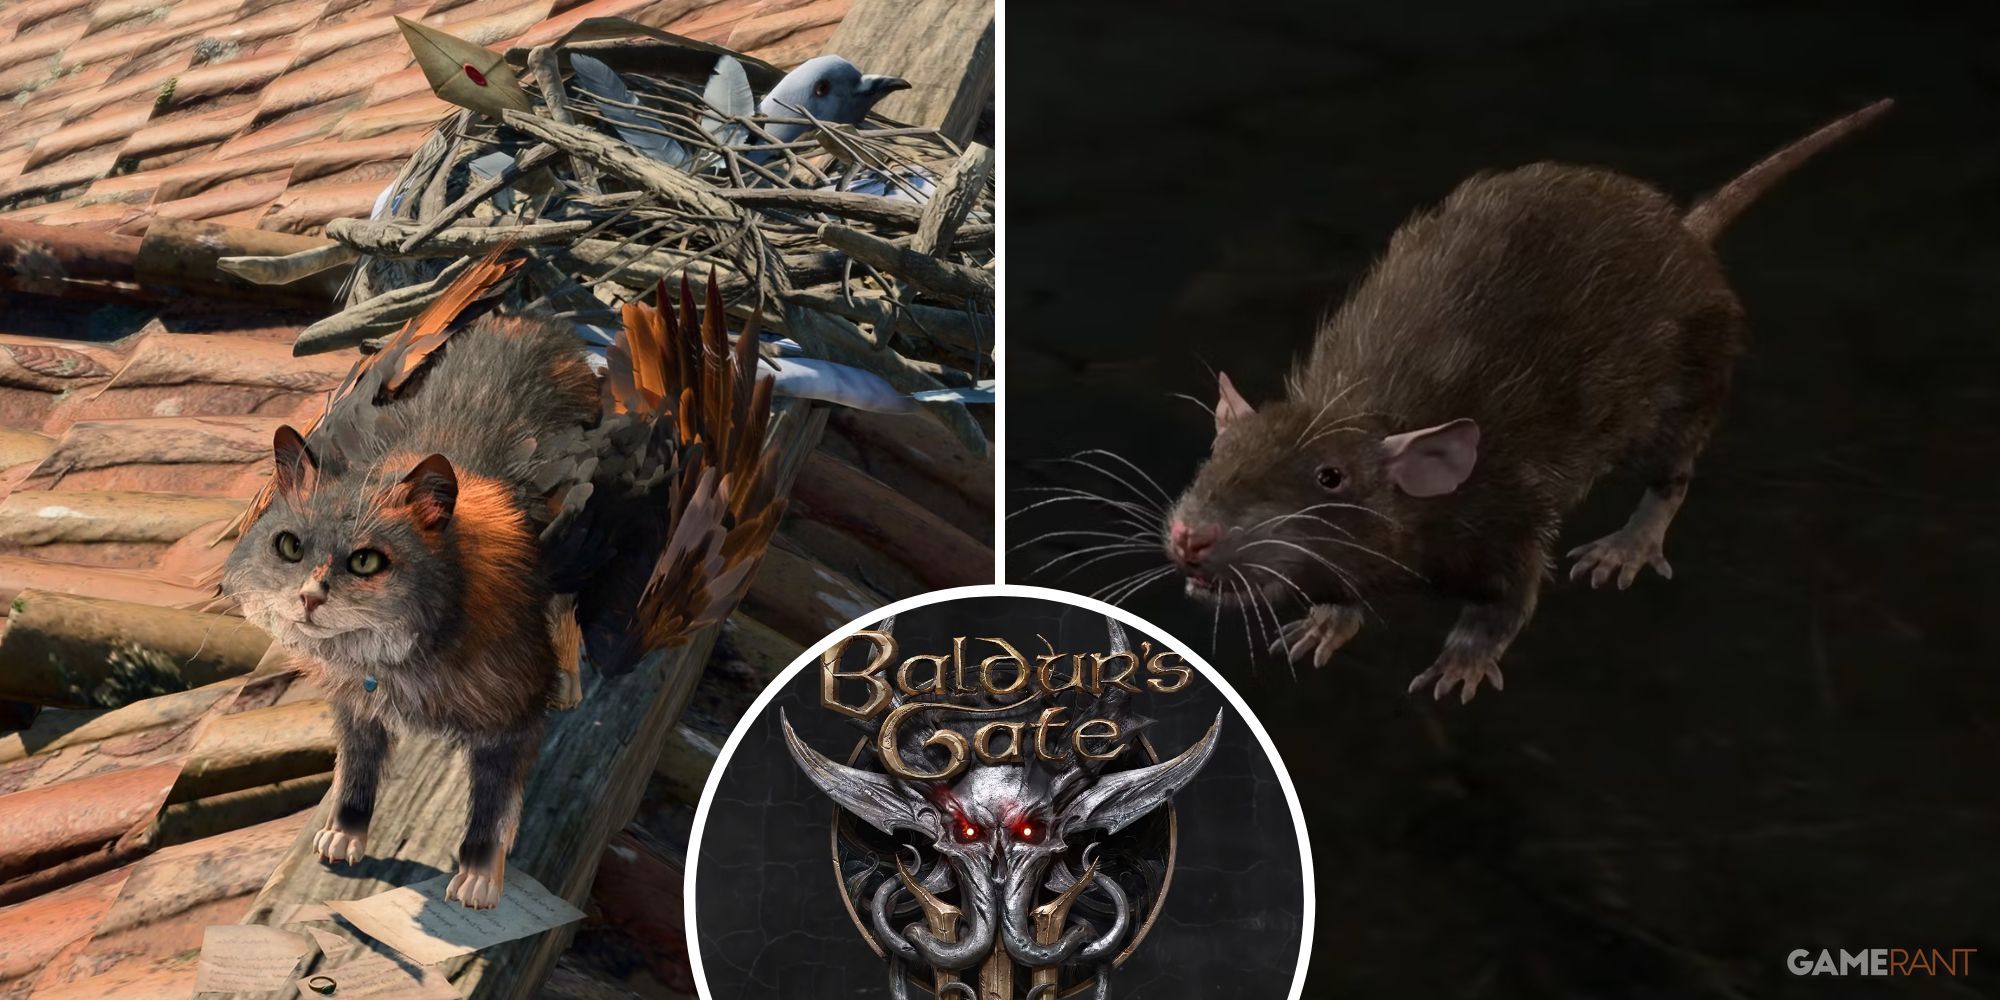 Baldurs Gate 3: All Animals That Are Secretly Merchants